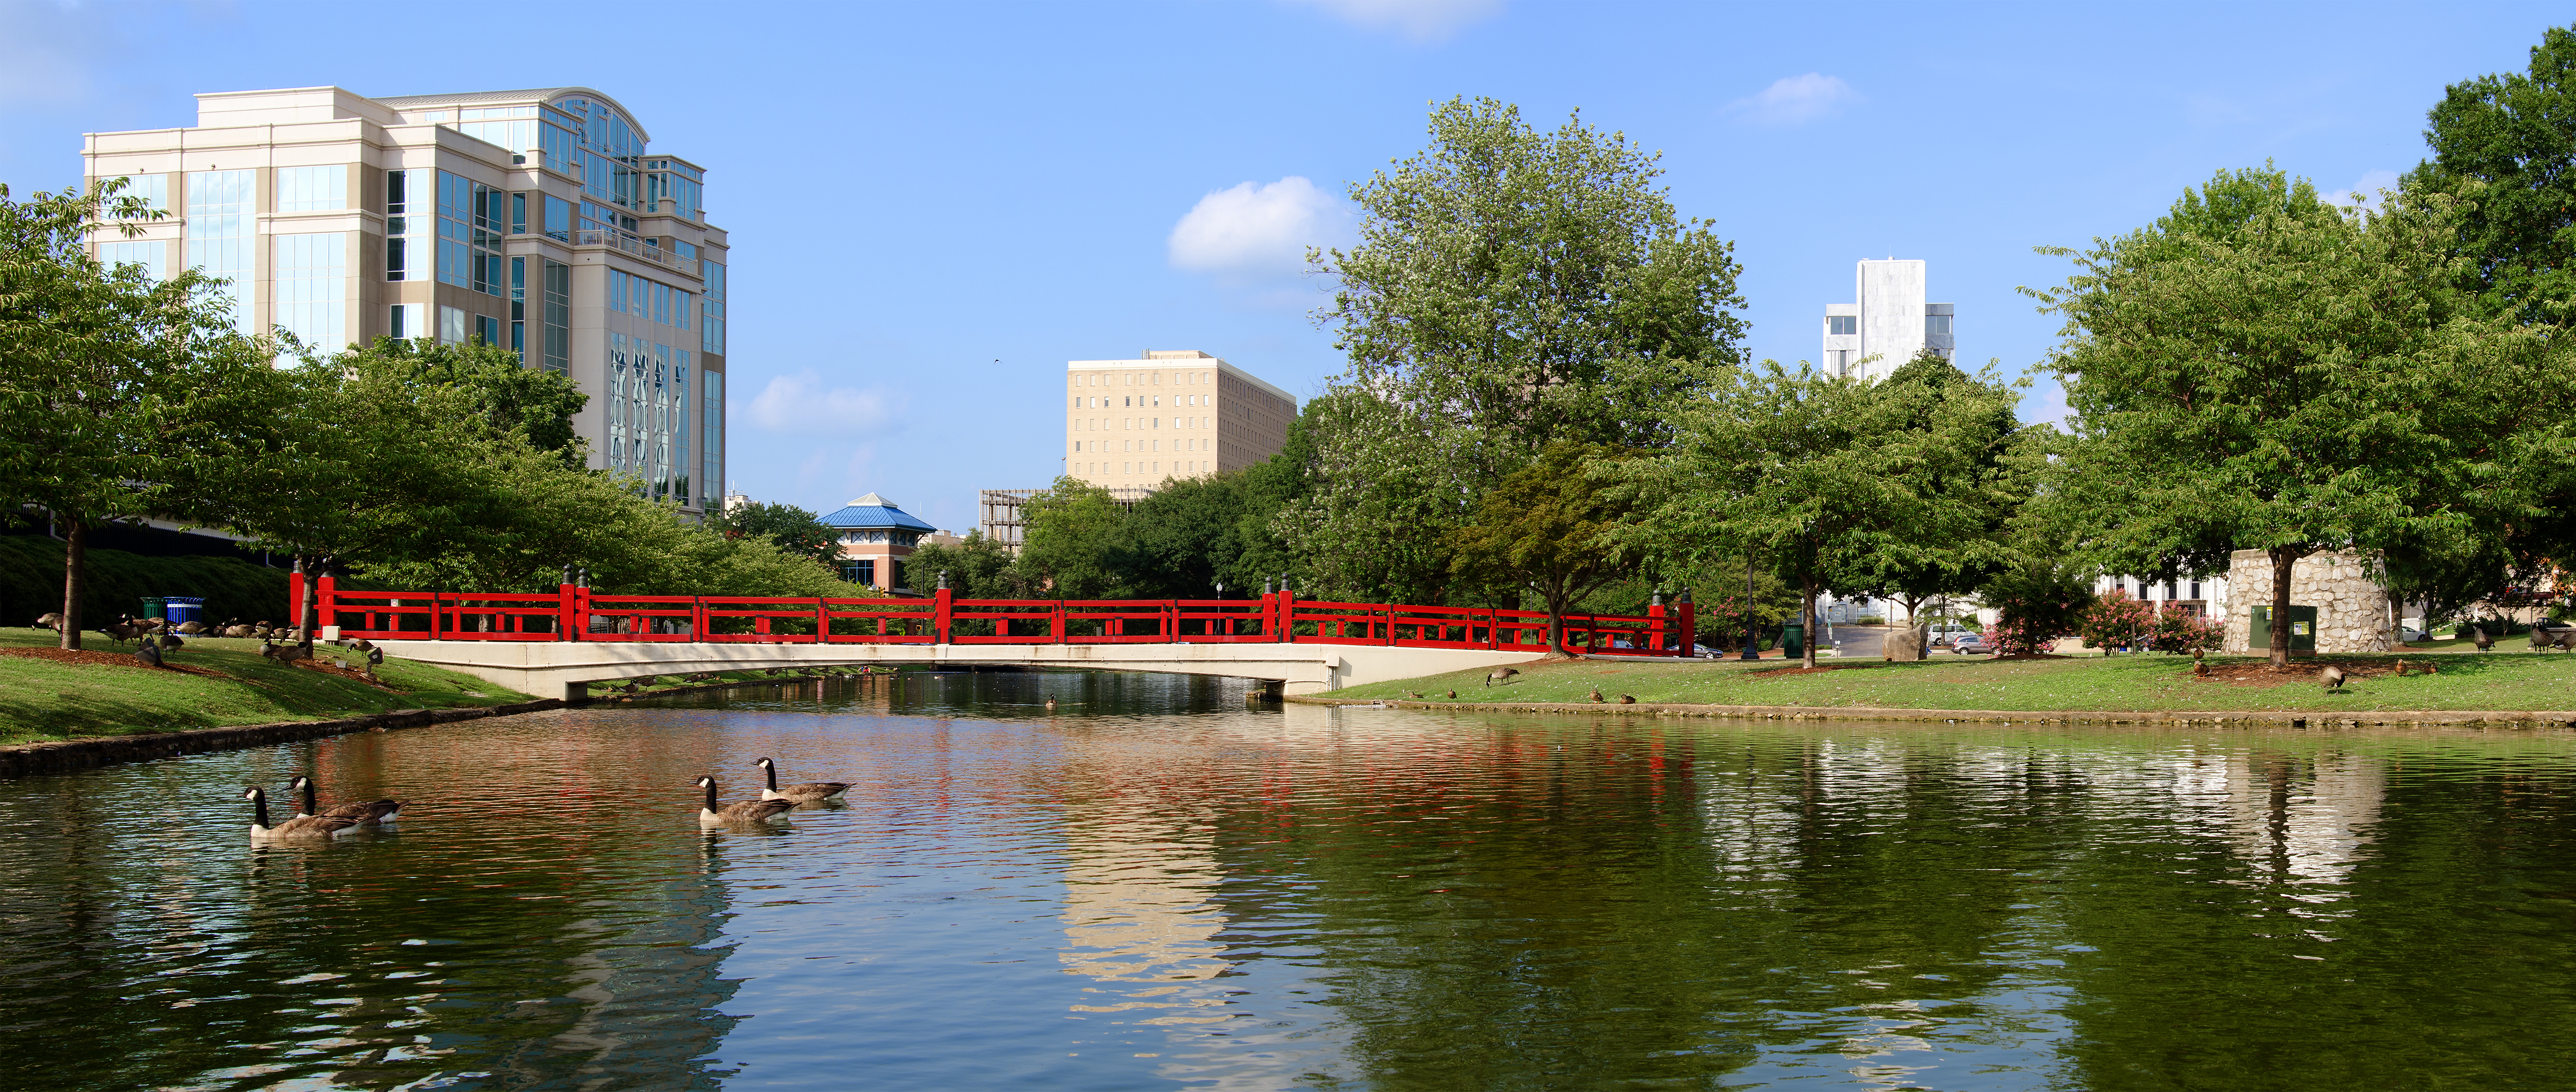 red walking bridge over lake with geese in Big Spring Park Huntsville Alabama